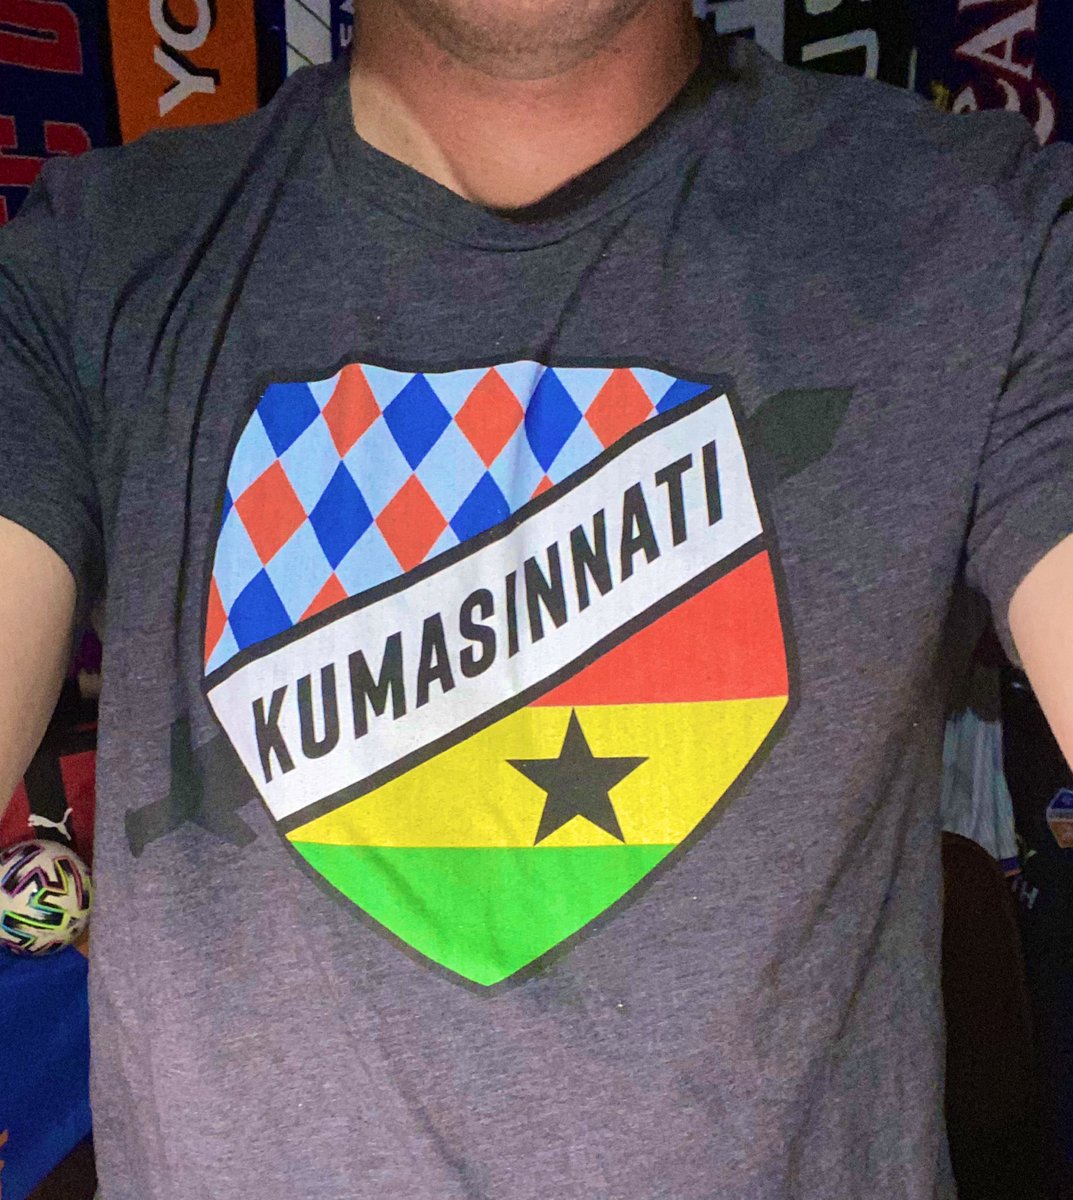 Kumasinnati shirt is always first choice 🔥 @ZaidanTunechi7 

#AllForCincy 

teepublic.com/user/kumasinna…